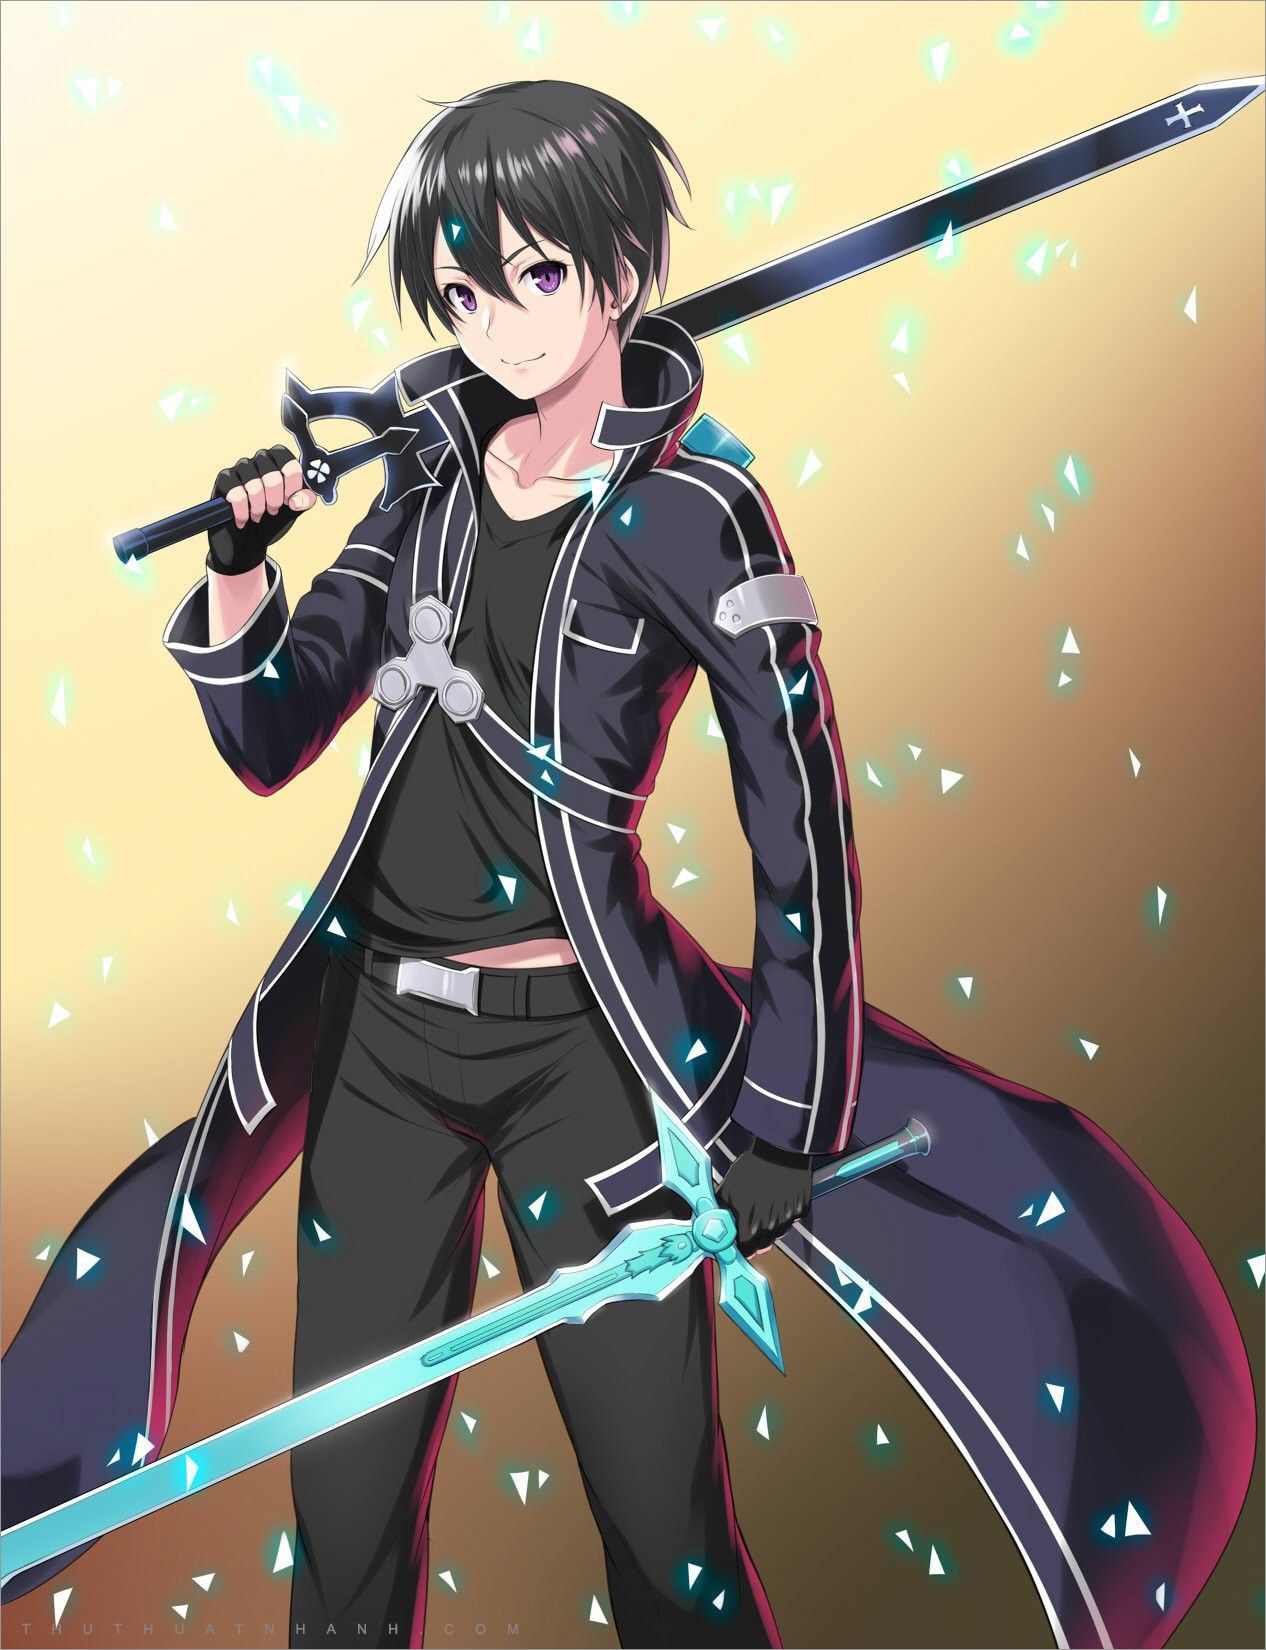 Hình nền  Sword Art Online Anime Kirito Sword Art Online 1950x1080   mxdp1  1854585  Hình nền đẹp hd  WallHere